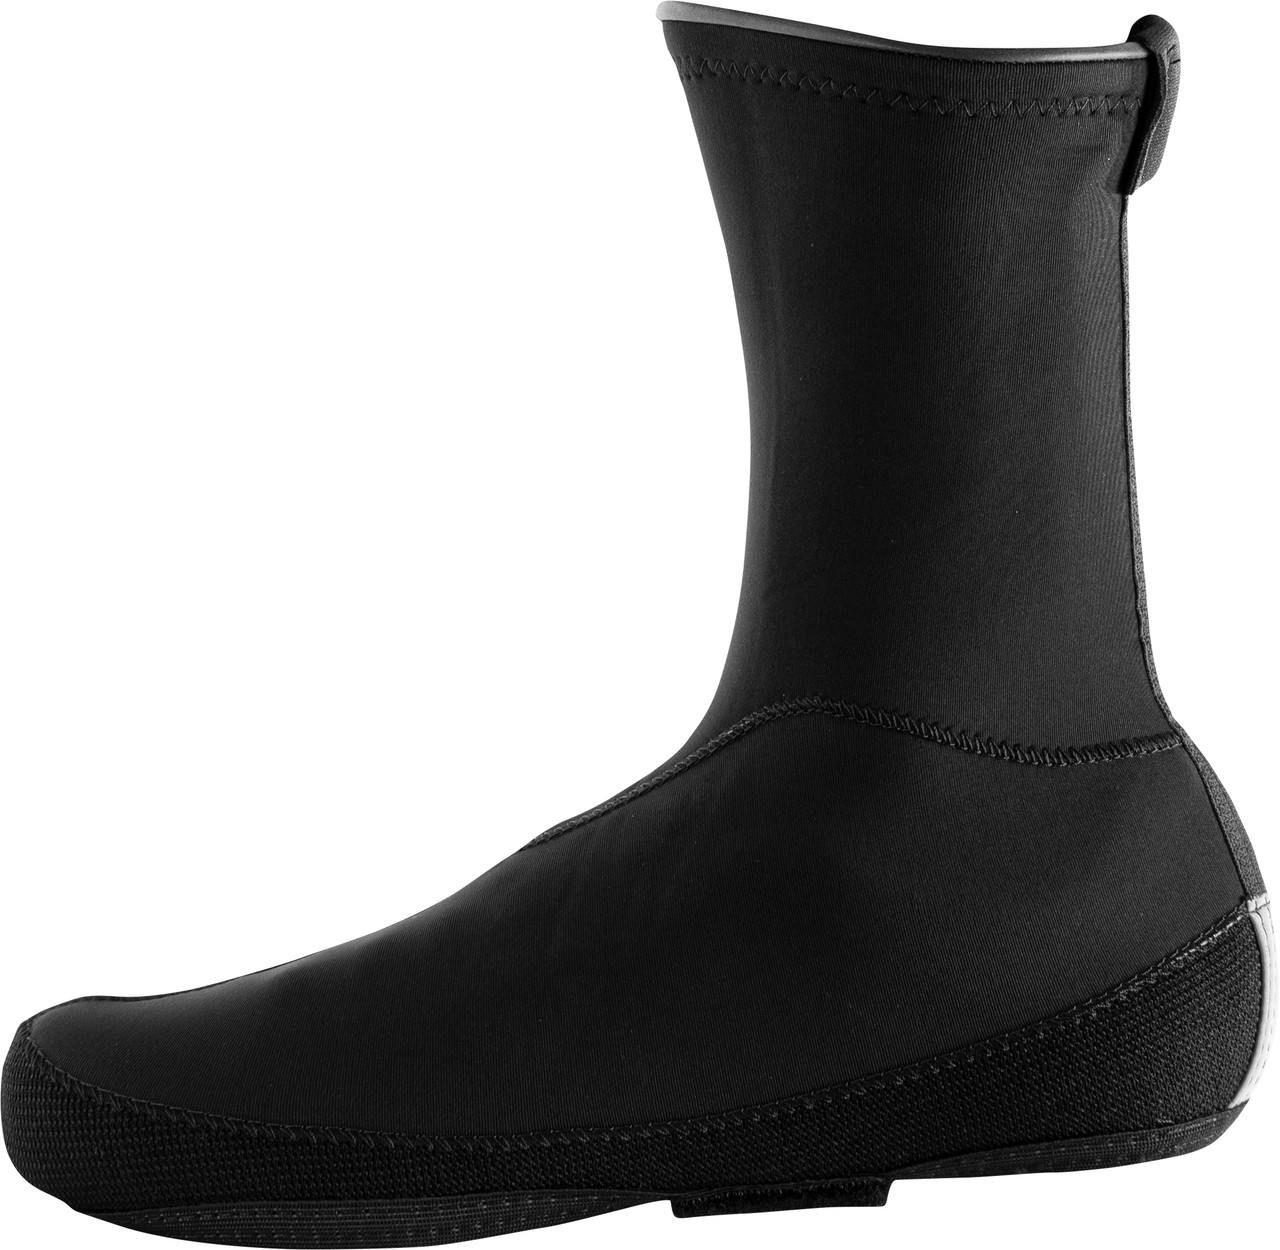 Couvre-chaussures Diluvio UL Noir/Noir